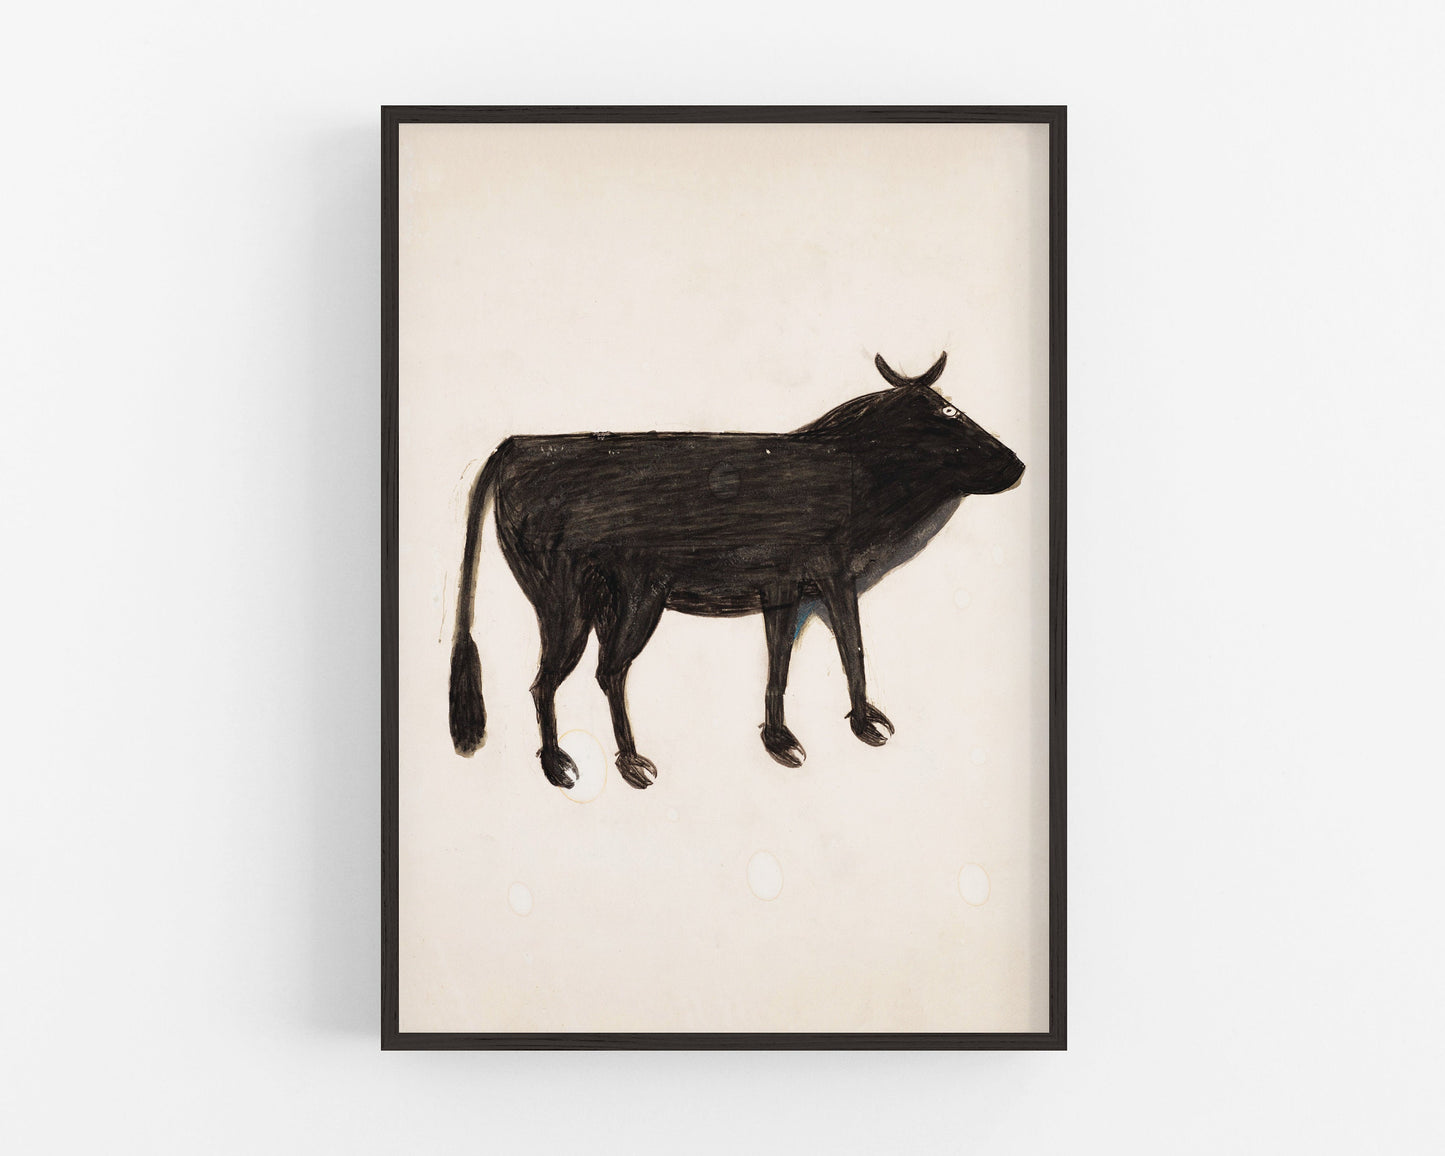 Bill Traylor Americana art | Black cow | Farm folk art | African American self-taught artist | Modern vintage wall décor